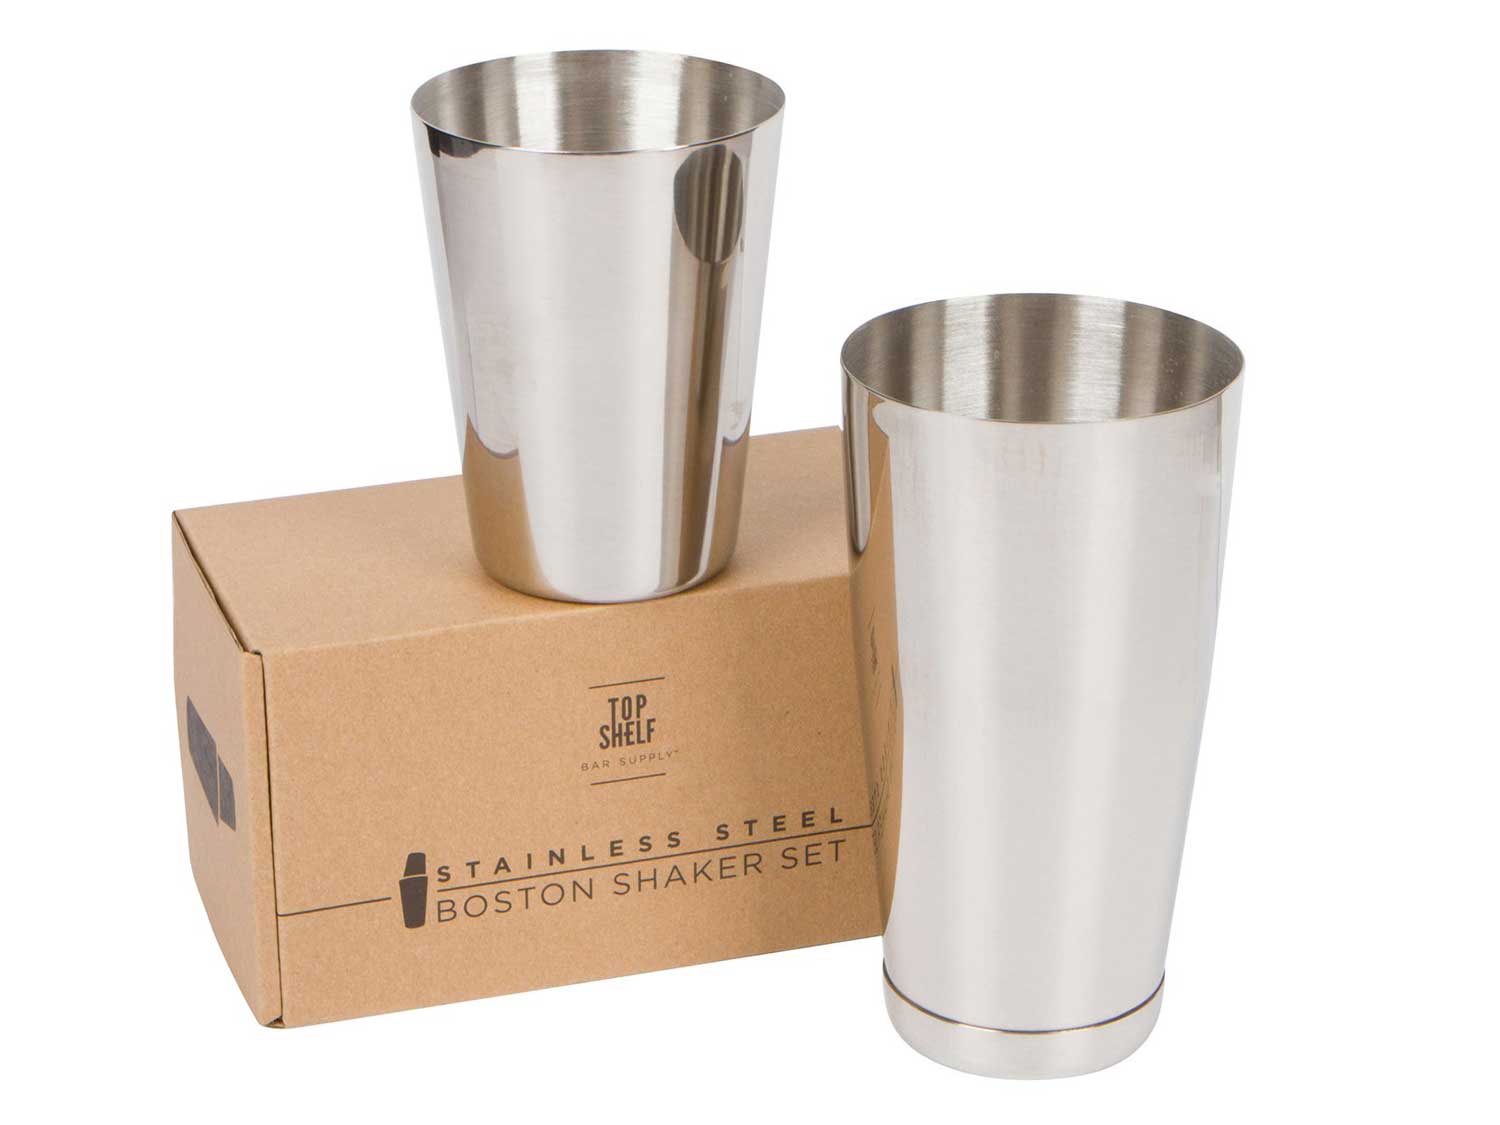 Premium Cocktail Shaker Set: 2-Piece Pro Boston Shaker Set